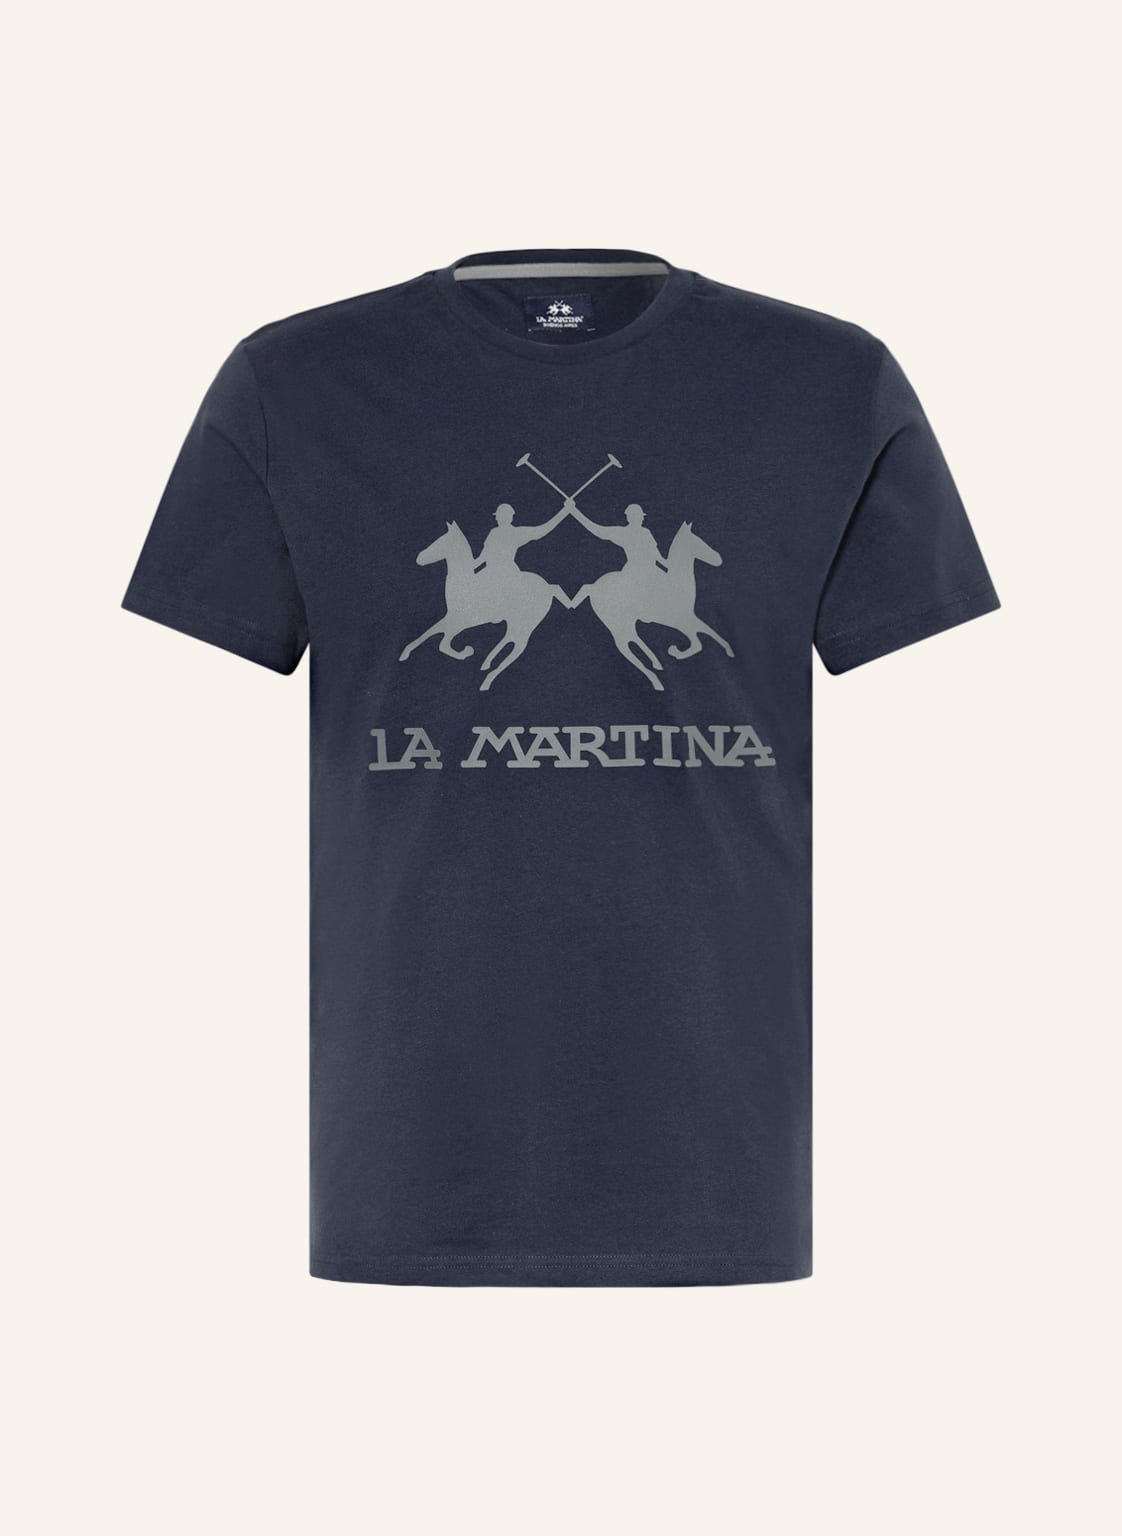 La Martina T-Shirt blau von LA MARTINA